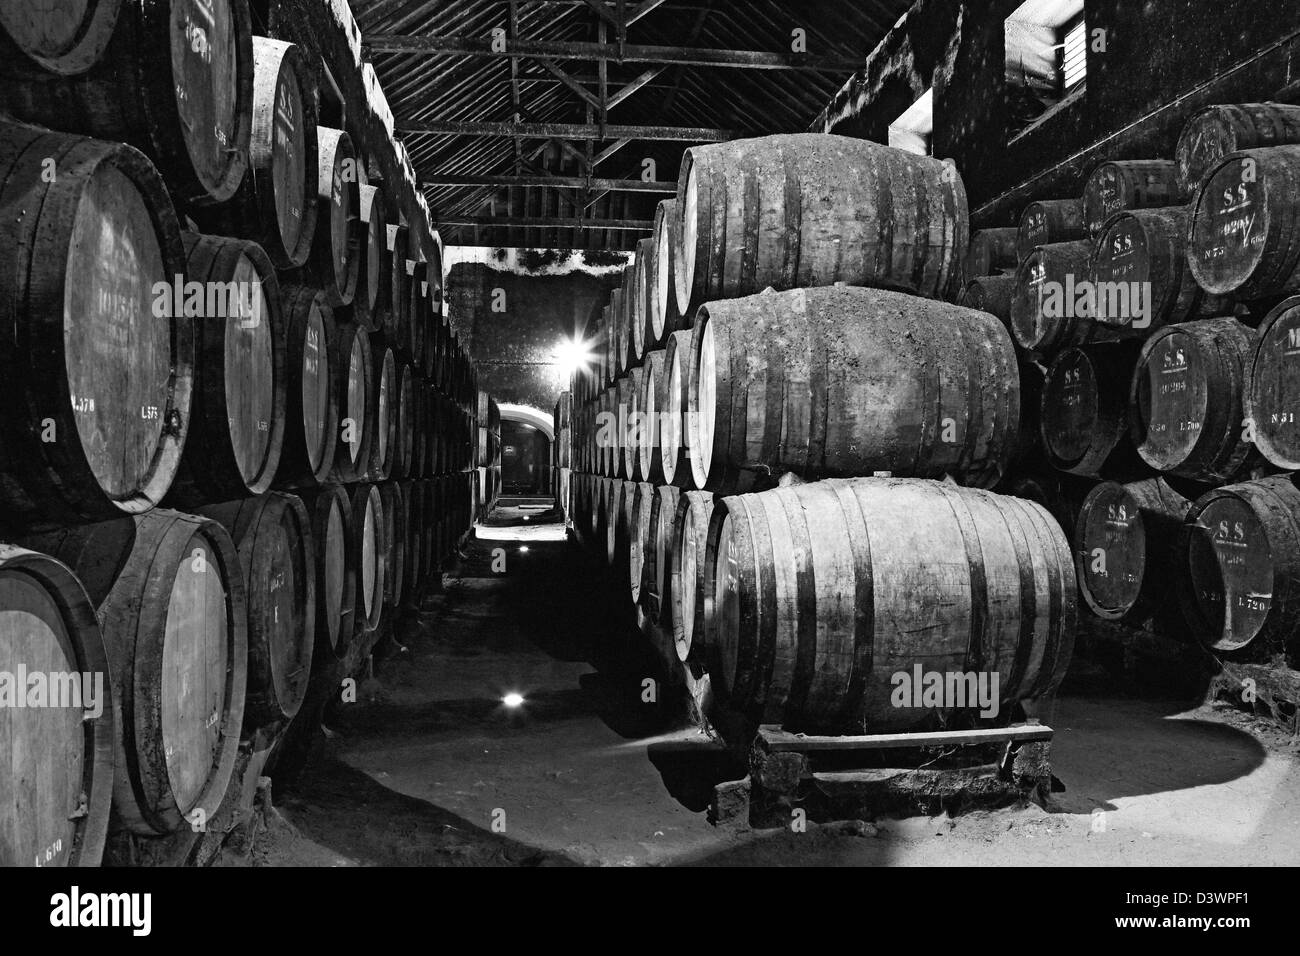 wine barrels Stock Photo